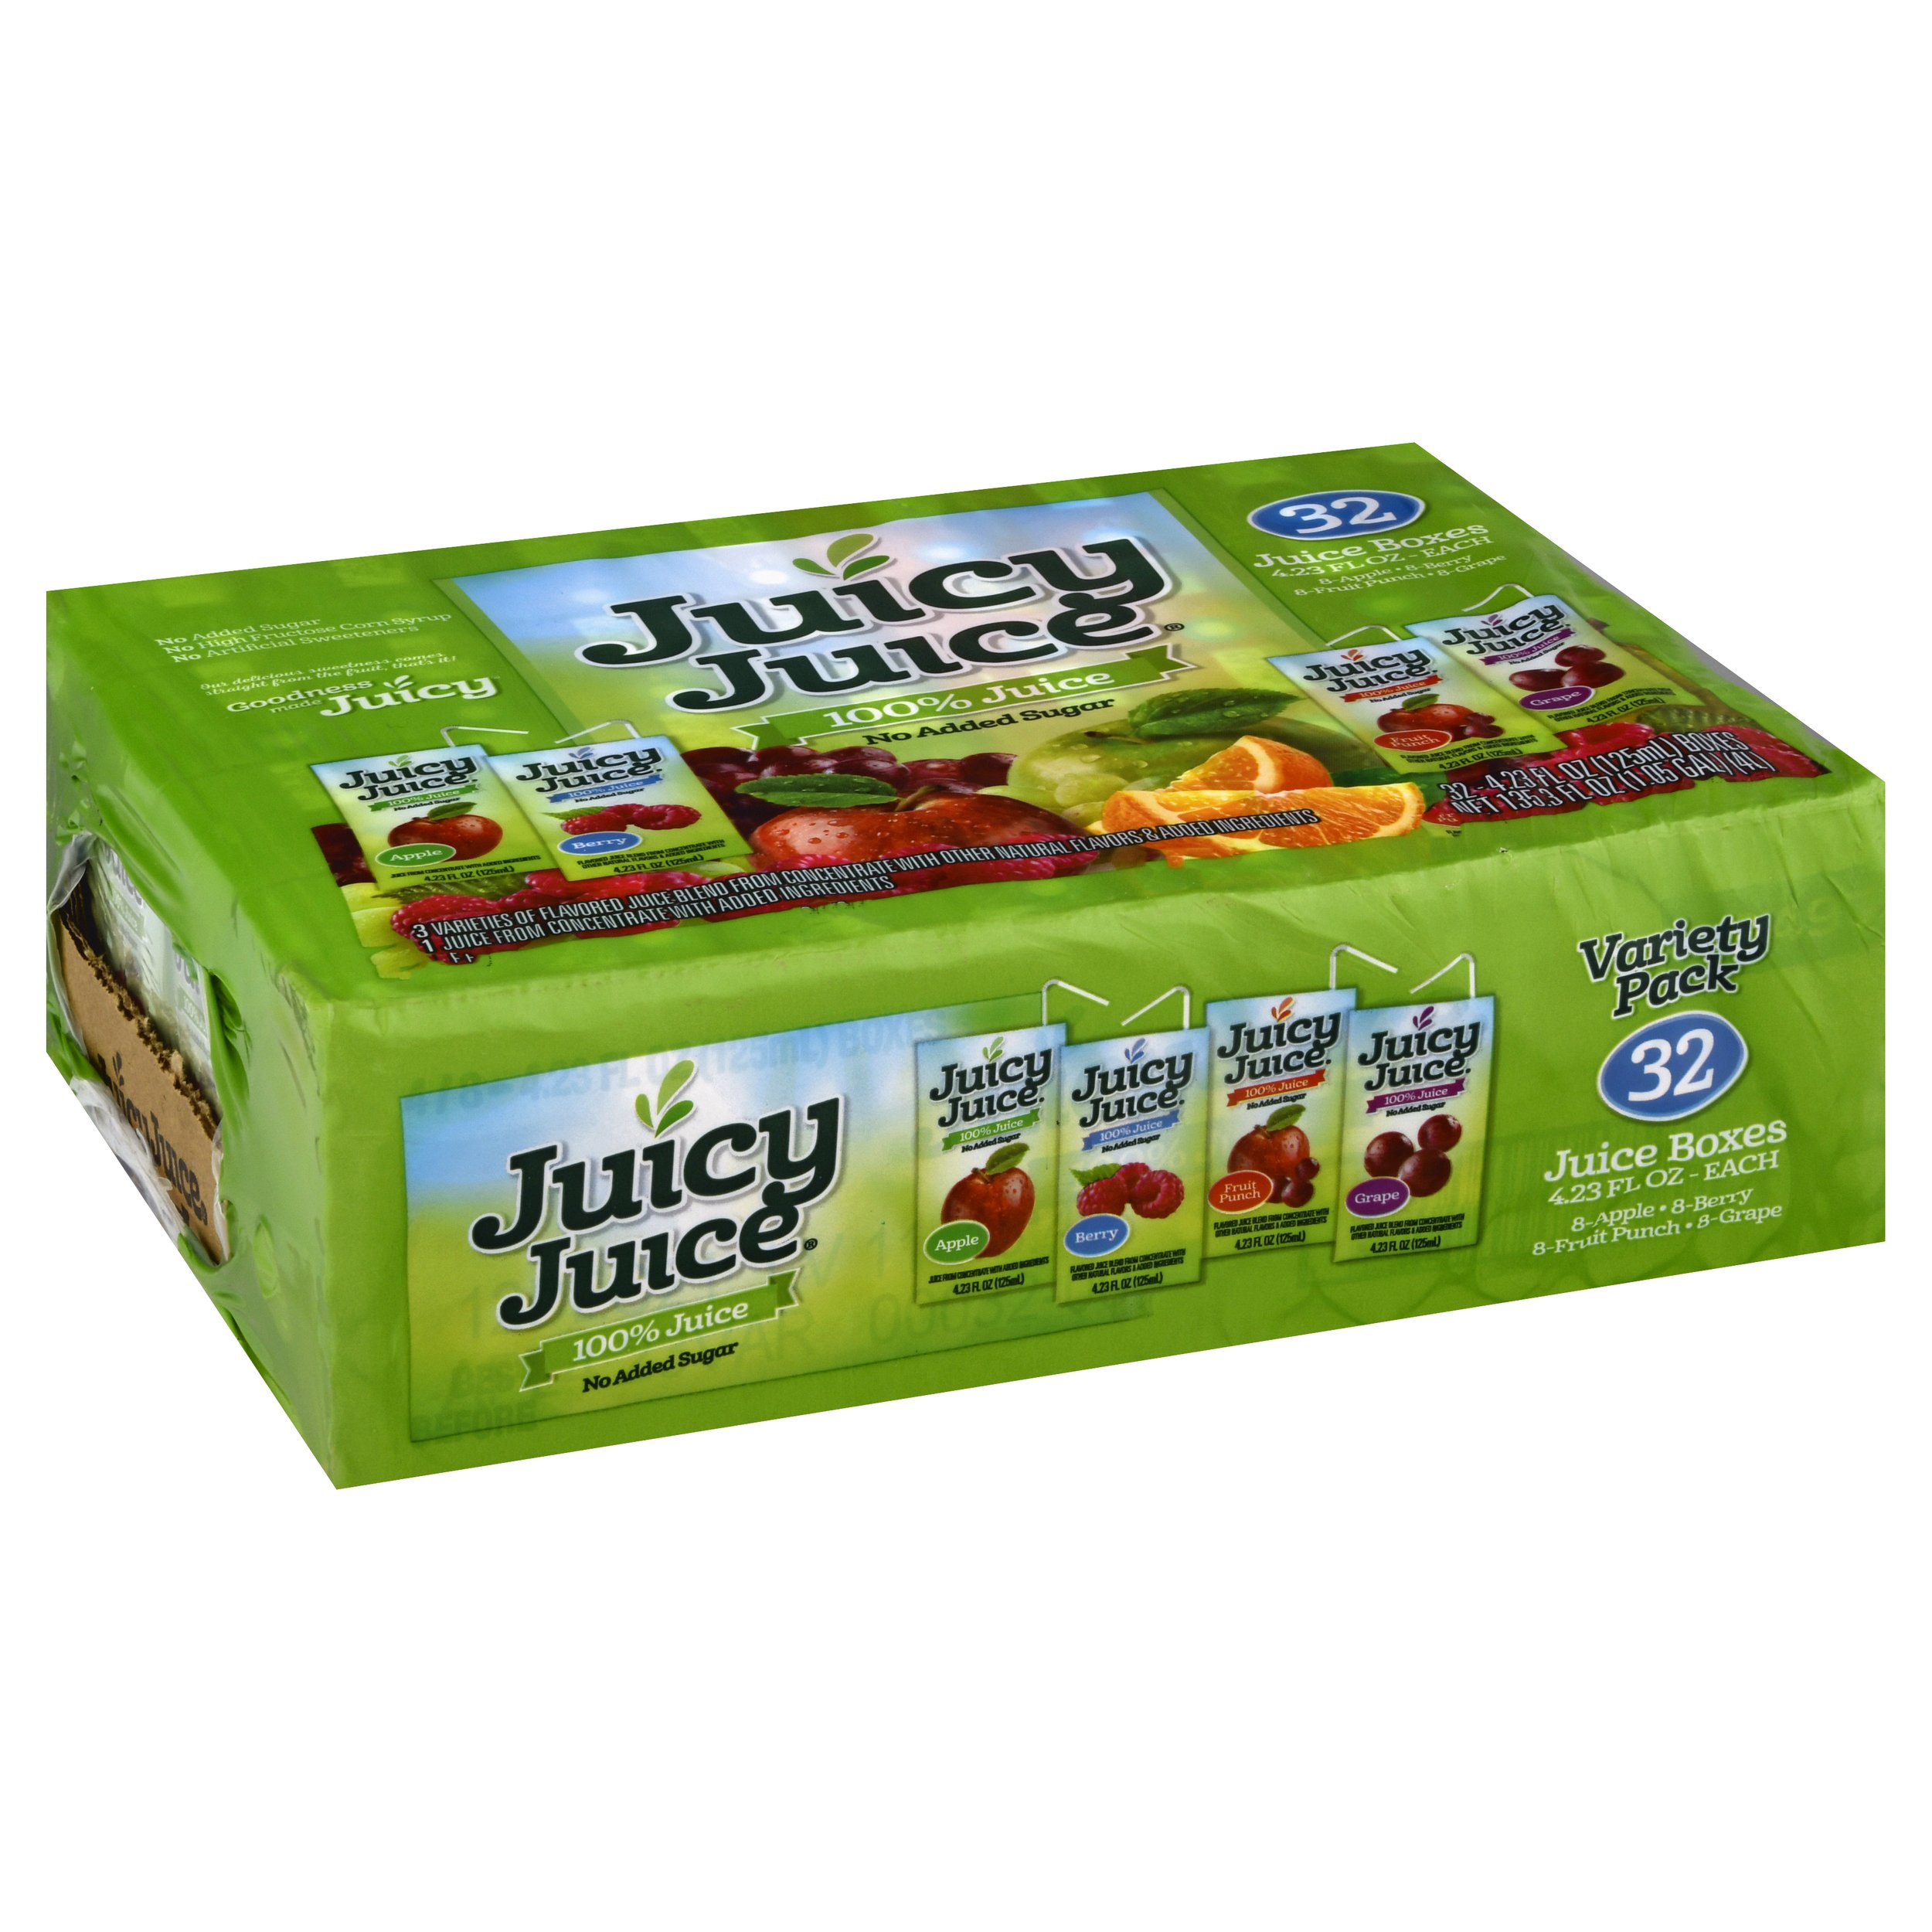 juicy-juice-variety-pack-4-23-oz-boxes-shop-juice-at-h-e-b